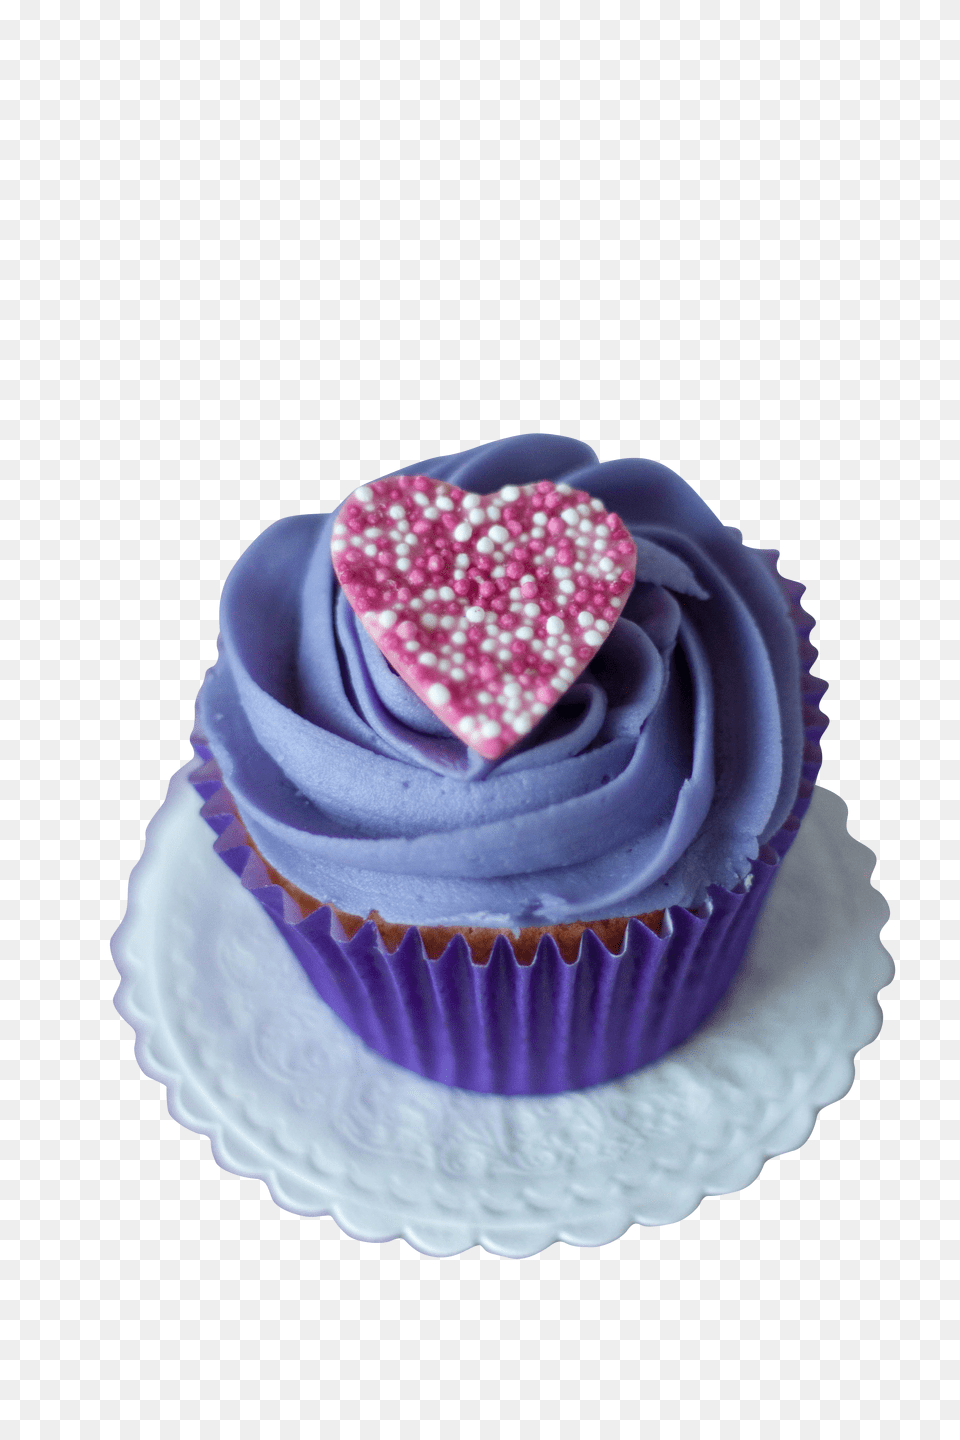 Cupcakes Clip, Cake, Cream, Cupcake, Dessert Png Image